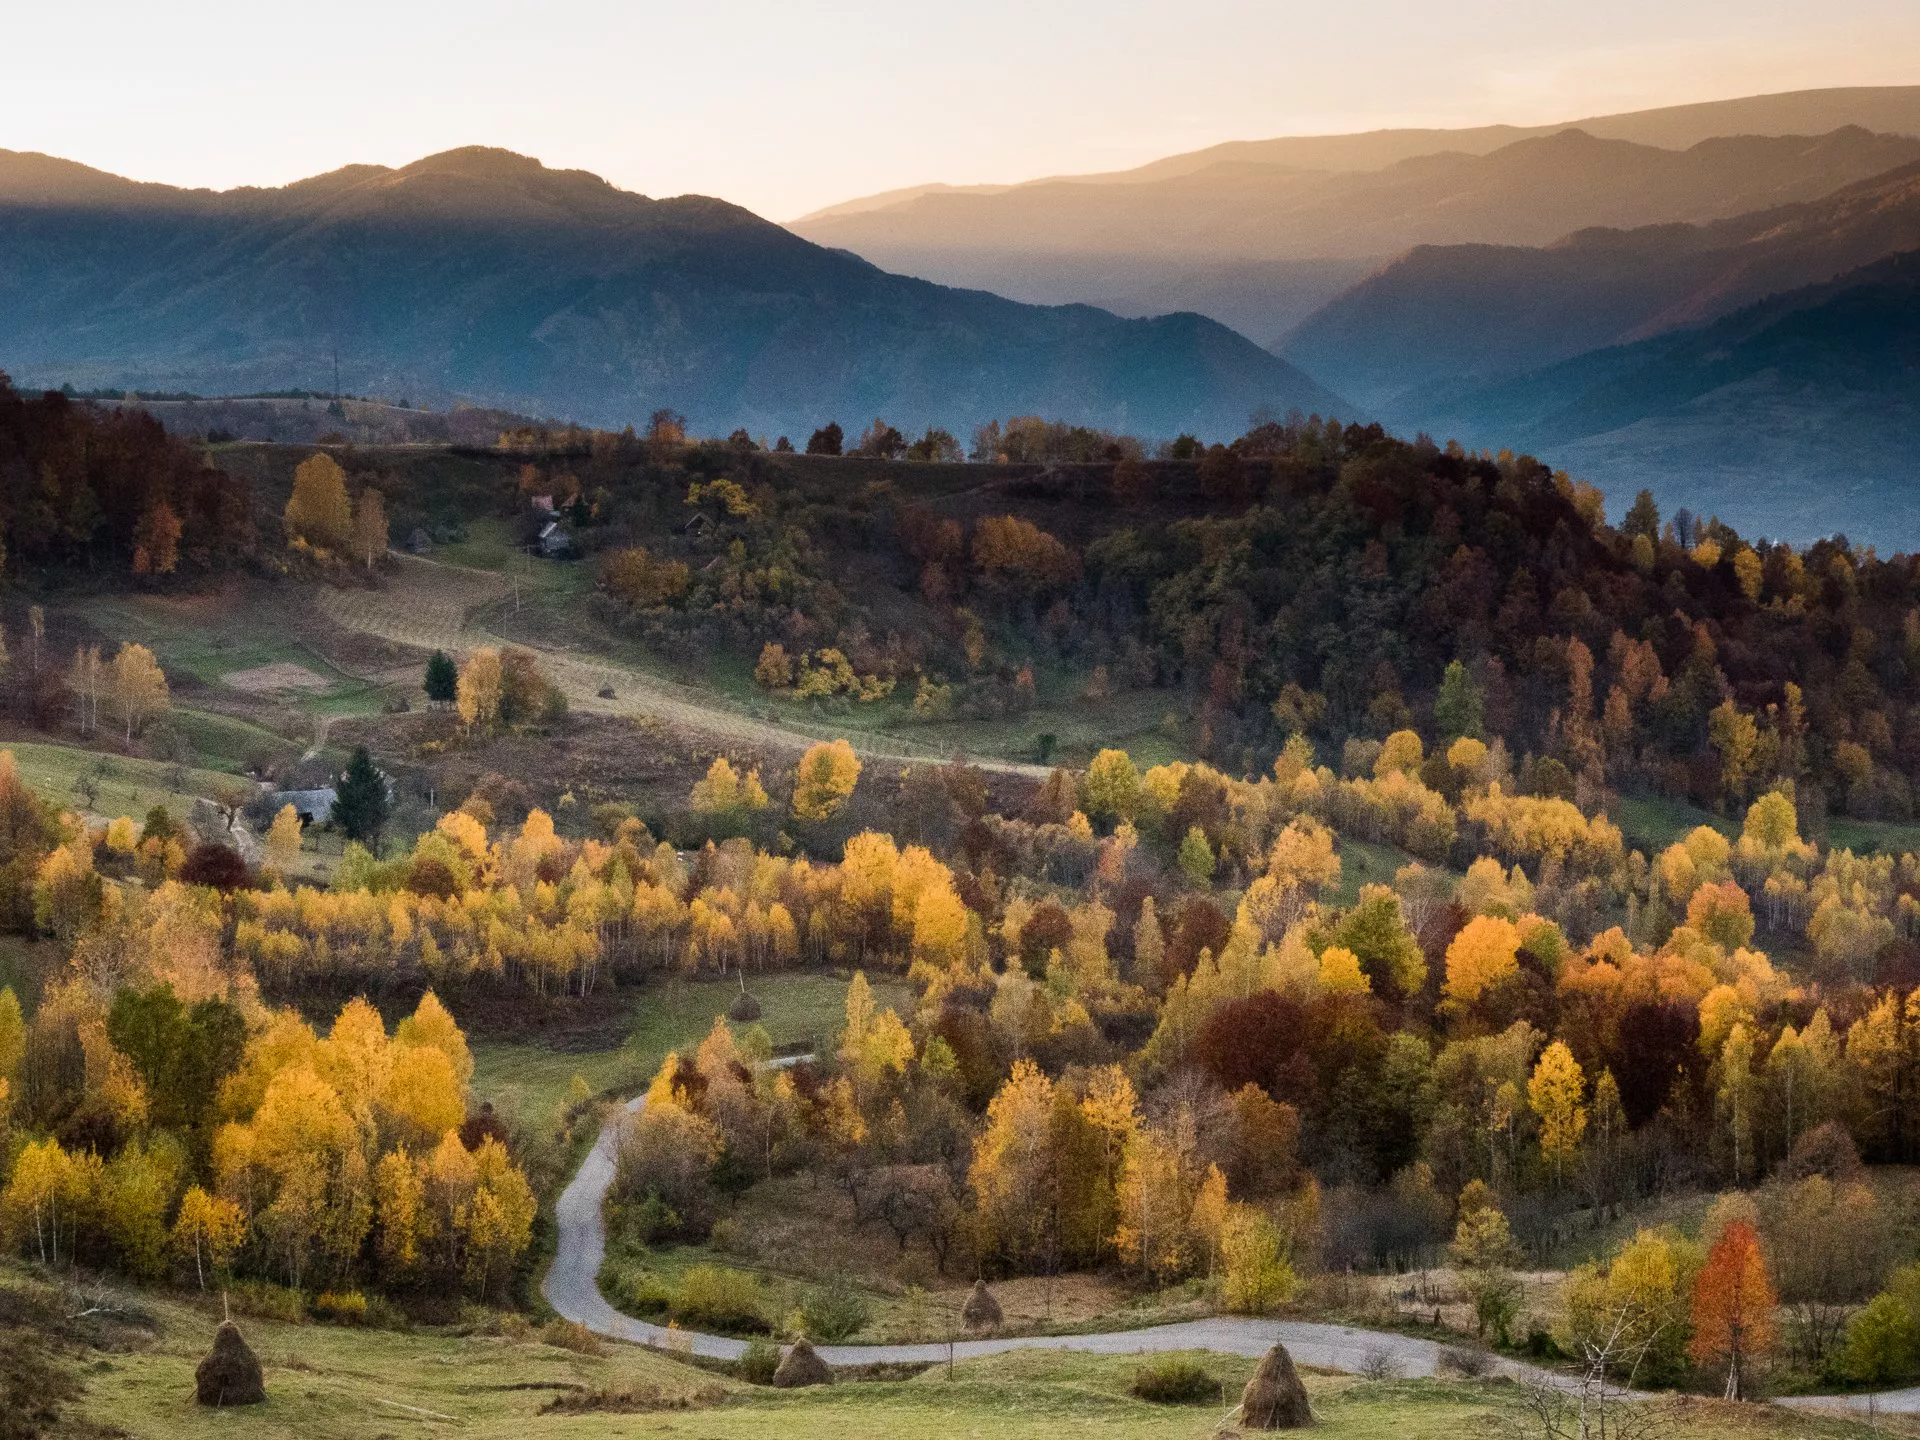 Apuseni Mountains in Romania, Europe | Mountains,Trekking & Hiking - Rated 0.9